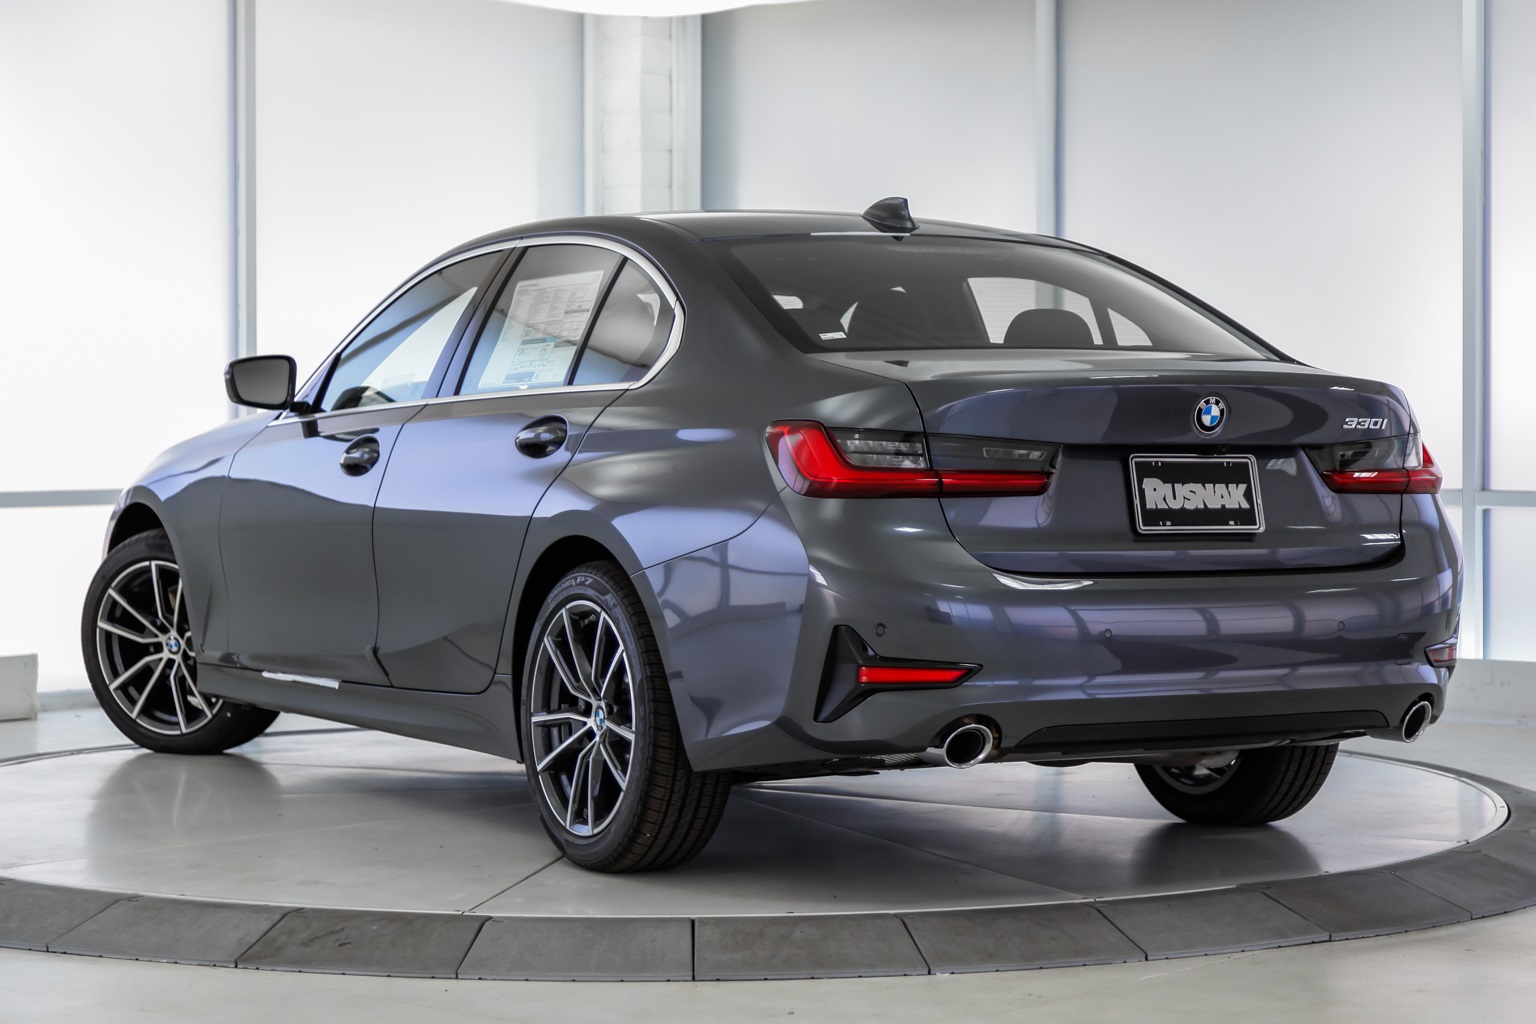 New 2020 BMW 3 Series 330i 4D Sedan in Thousand Oaks #24200908 | Rusnak BMW